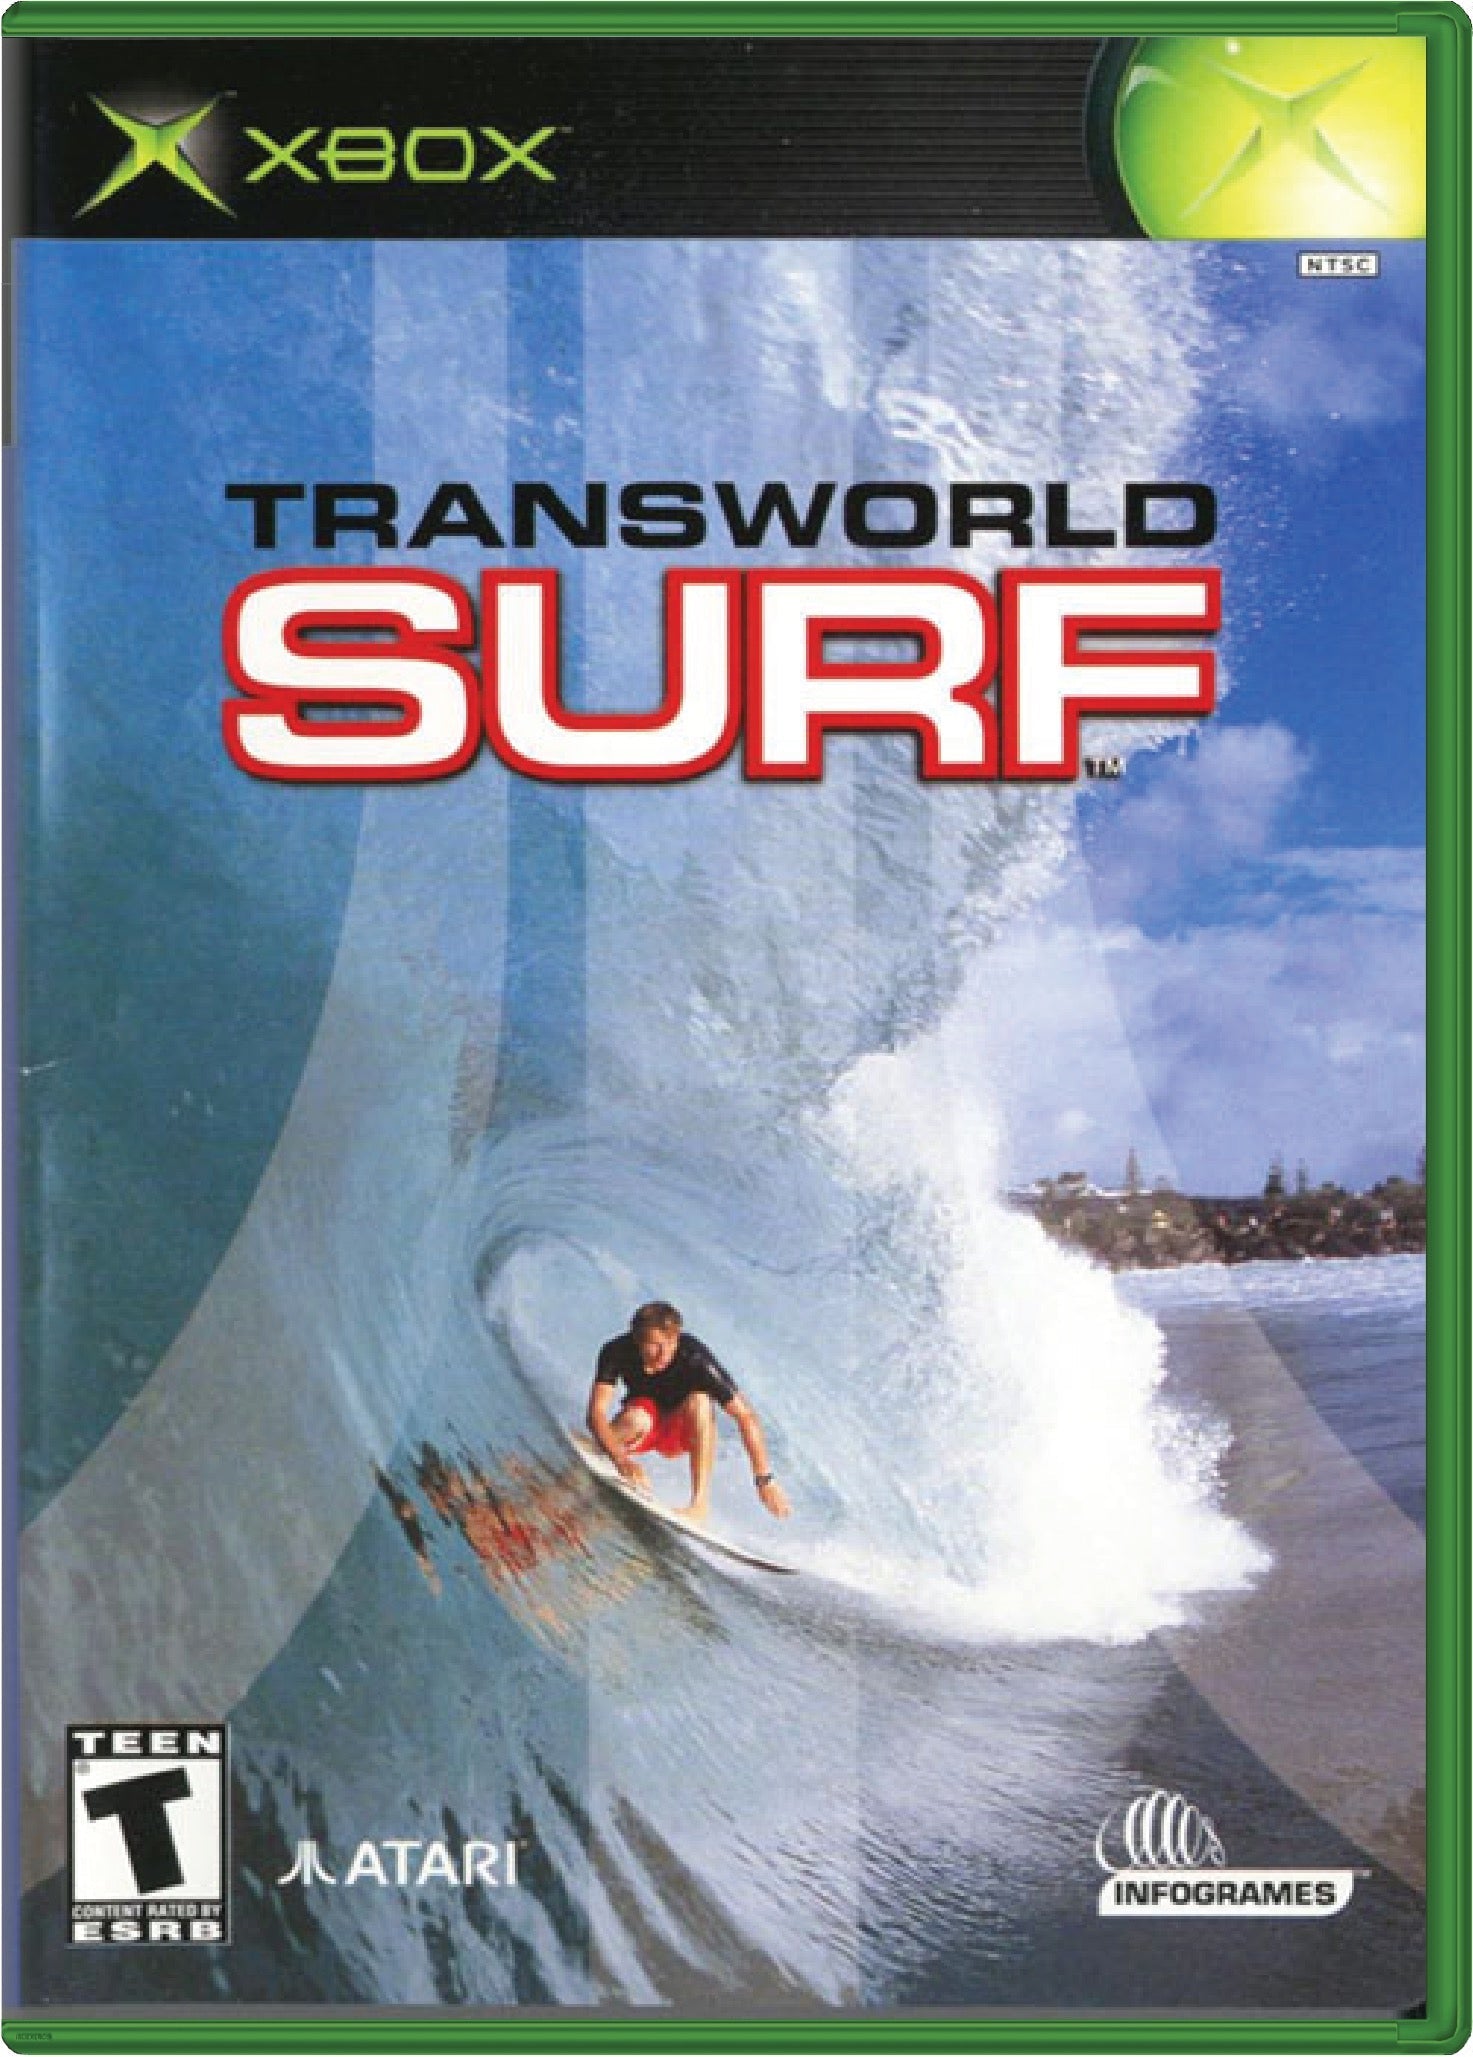 Transworld Surf Cover Art